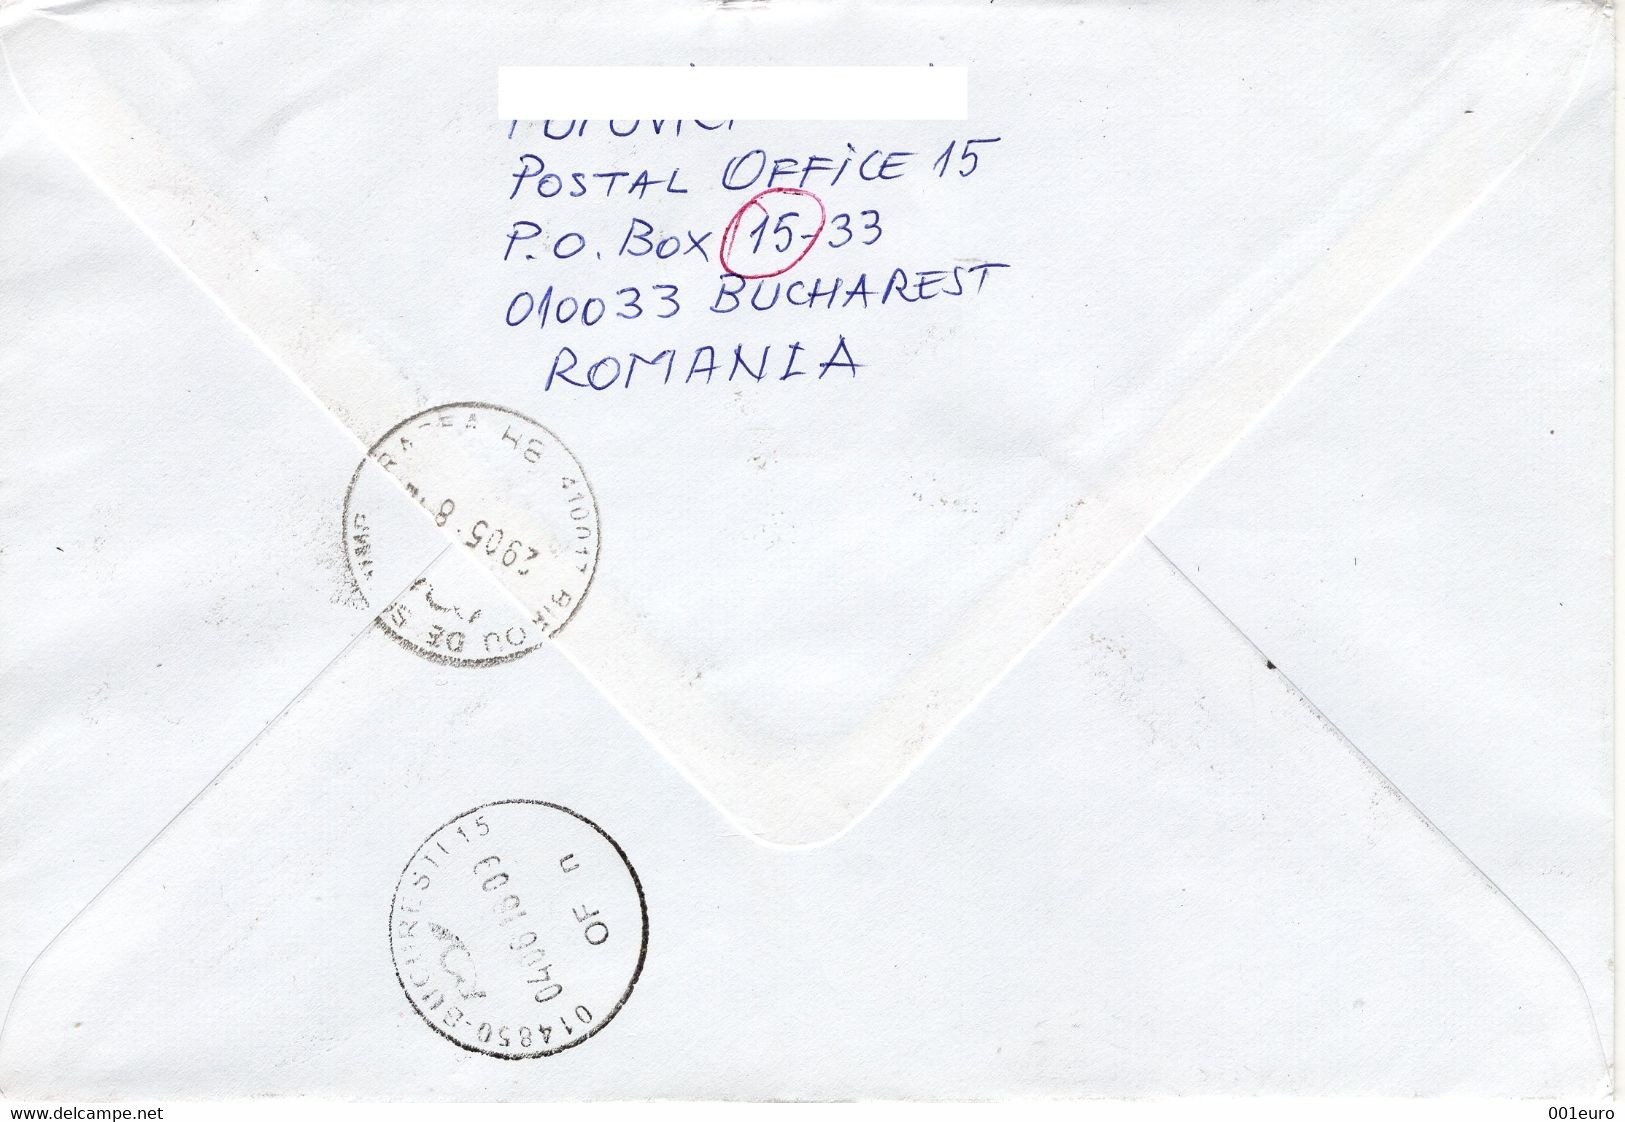 ROMANIA  2018 : BIRDS - CRANES Returned REGISTERED Cover From GERMANY - Registered Shipping! - Briefe U. Dokumente